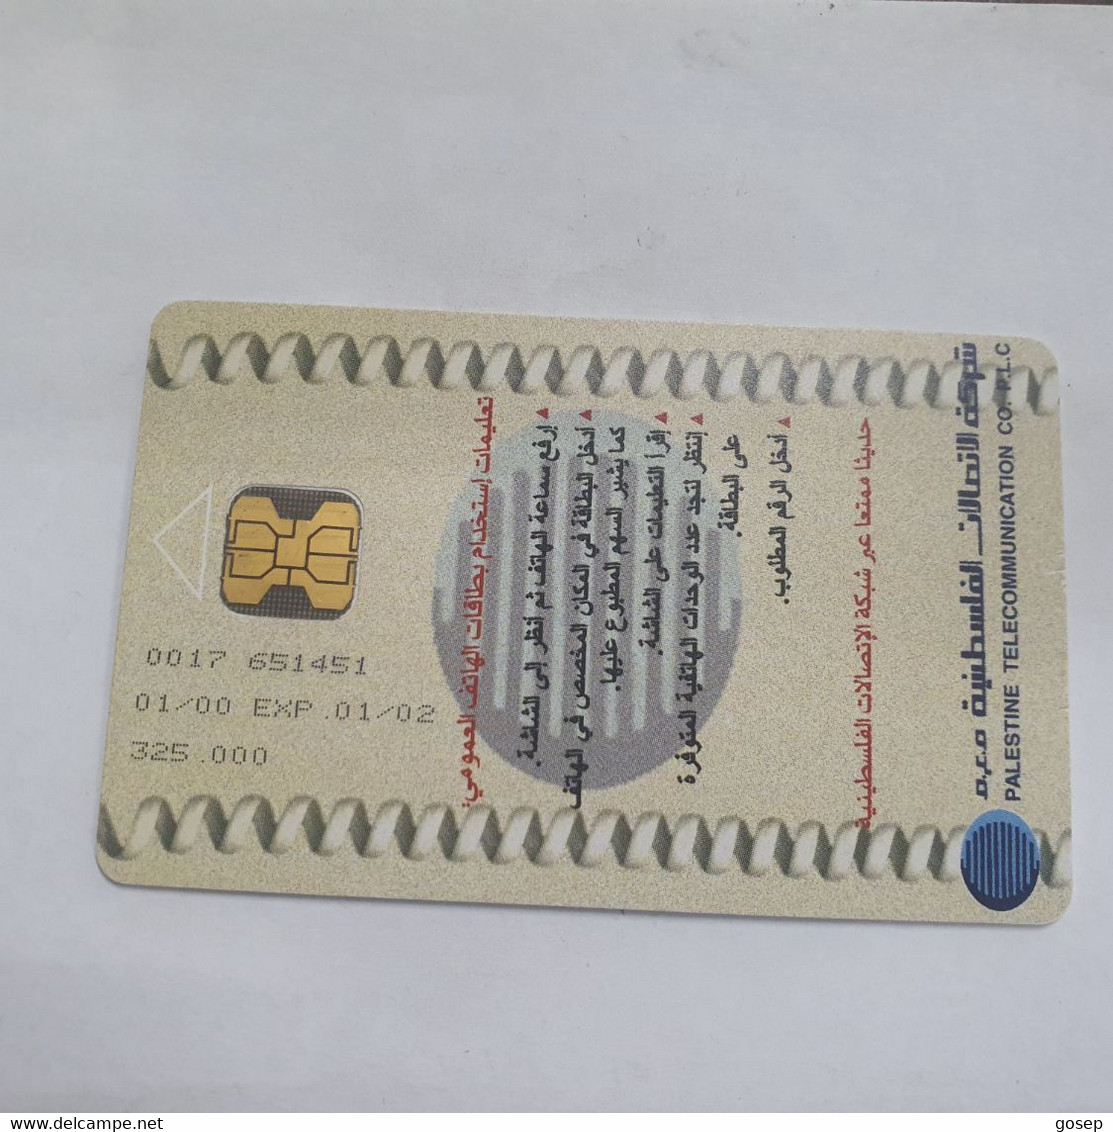 Plastine-(PS-PAL-0009C)-Behlehem City-(486)-(1/2000)(10₪)(0017-651451)-used Card+1card Prepiad Free - Palestine